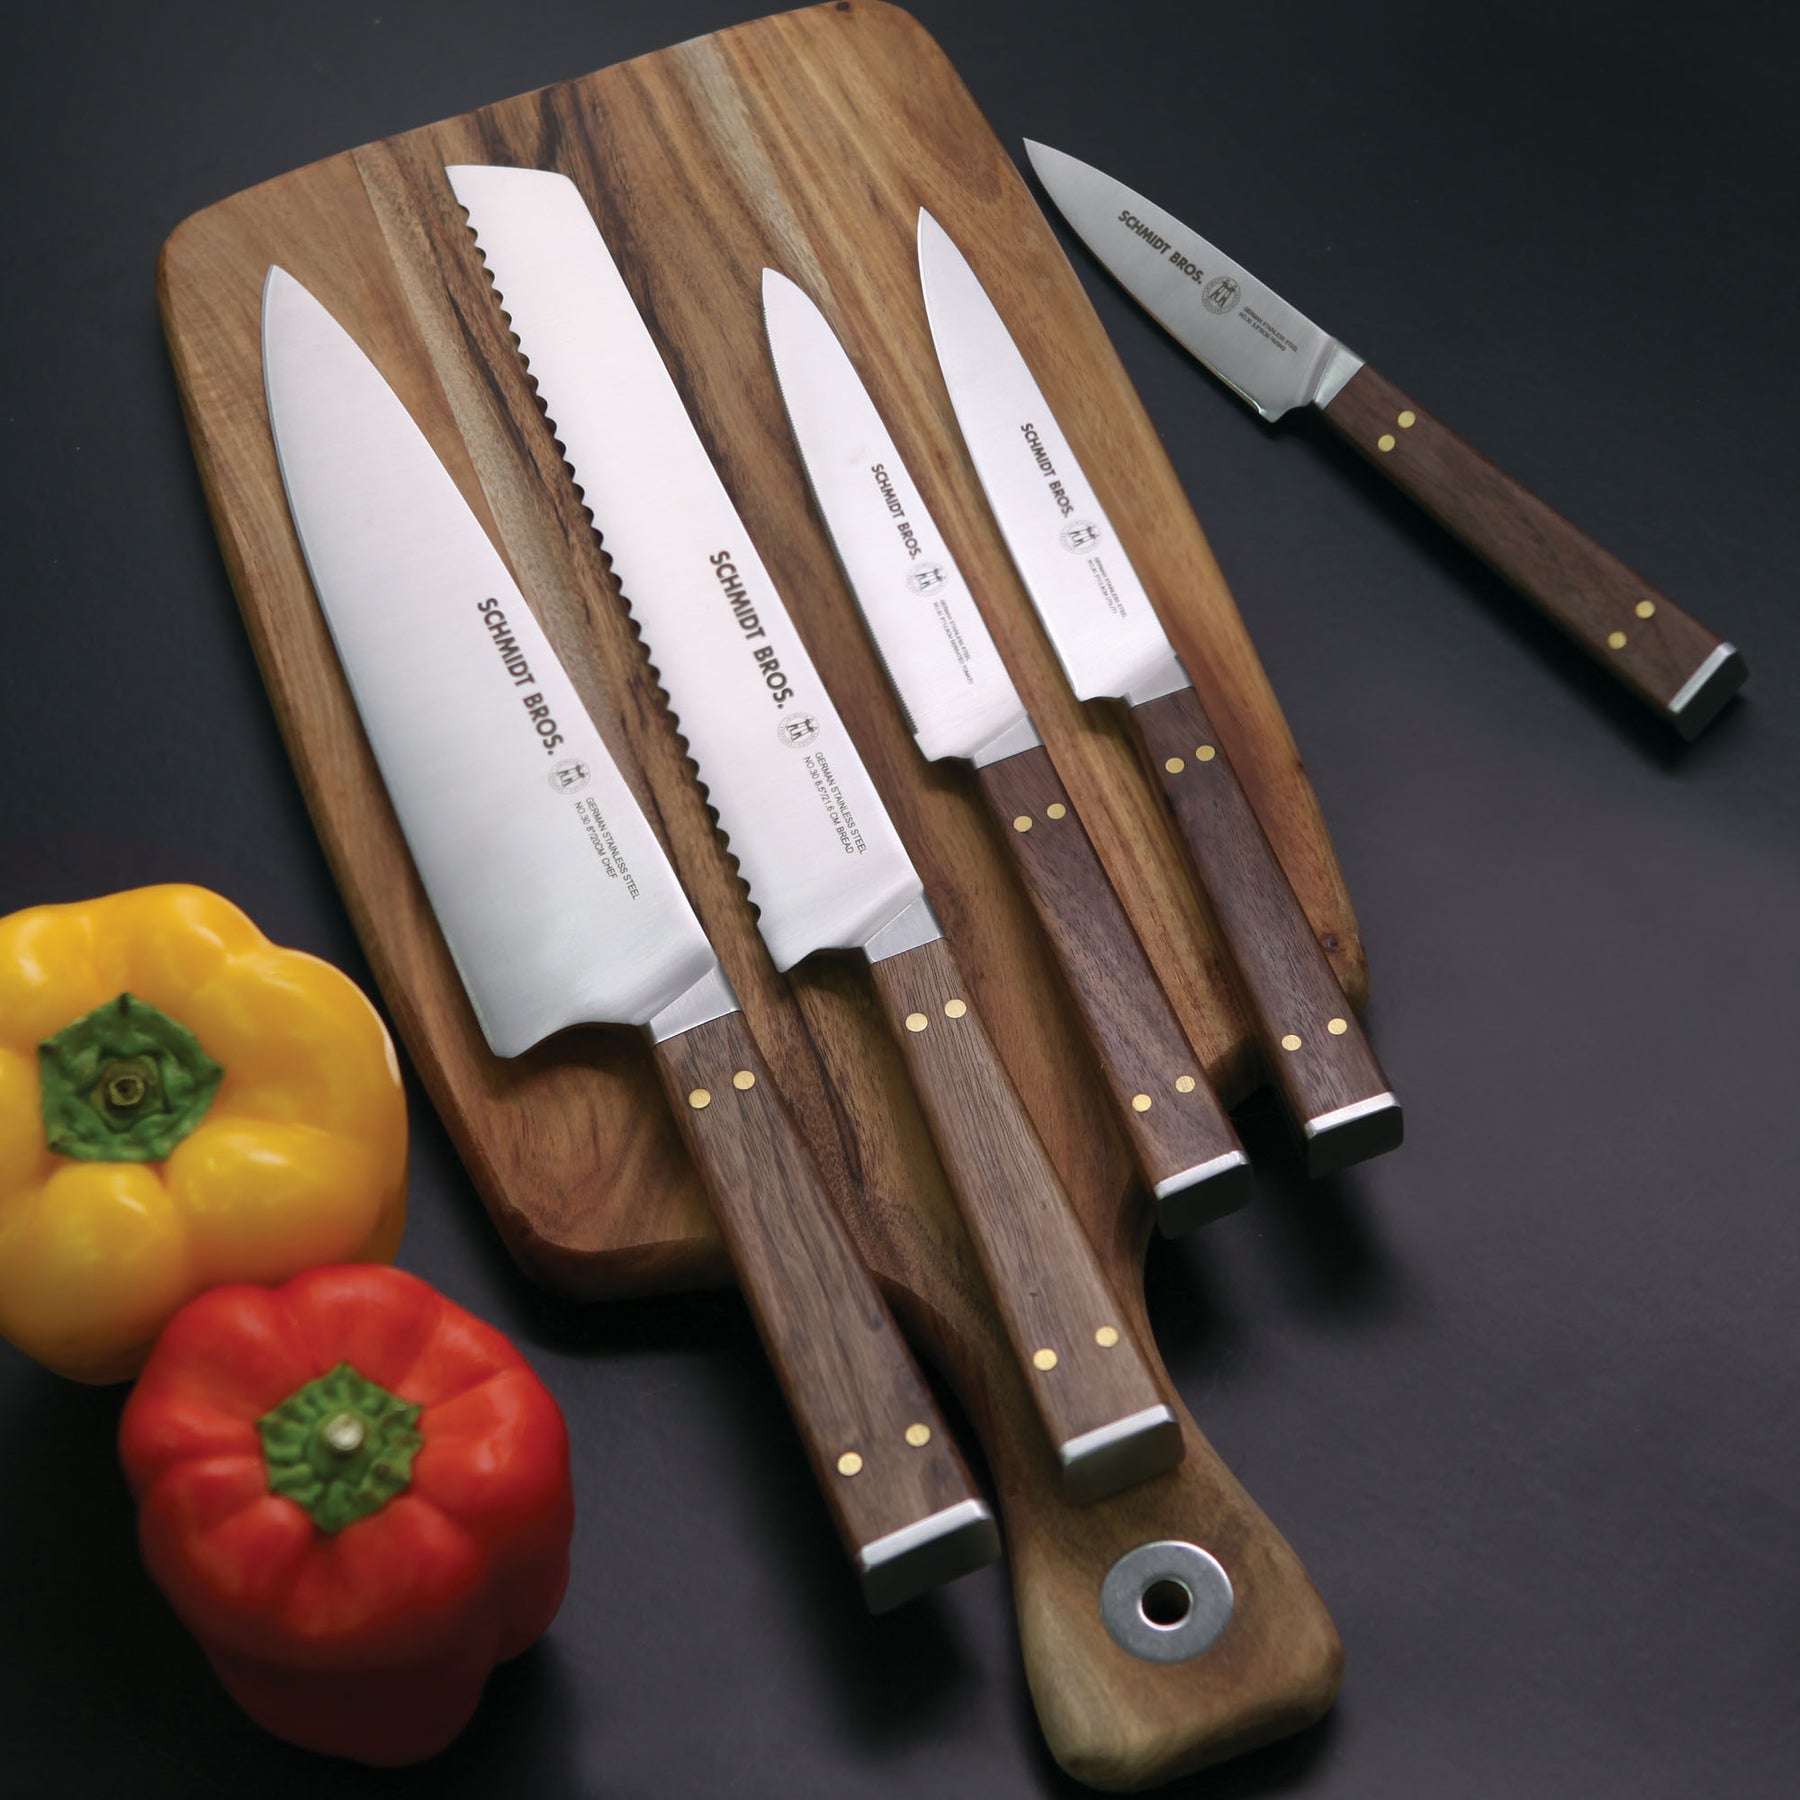 Schmidt Brothers Cutlery Stone Series 7 Pc. Knife Block Set – Openbax